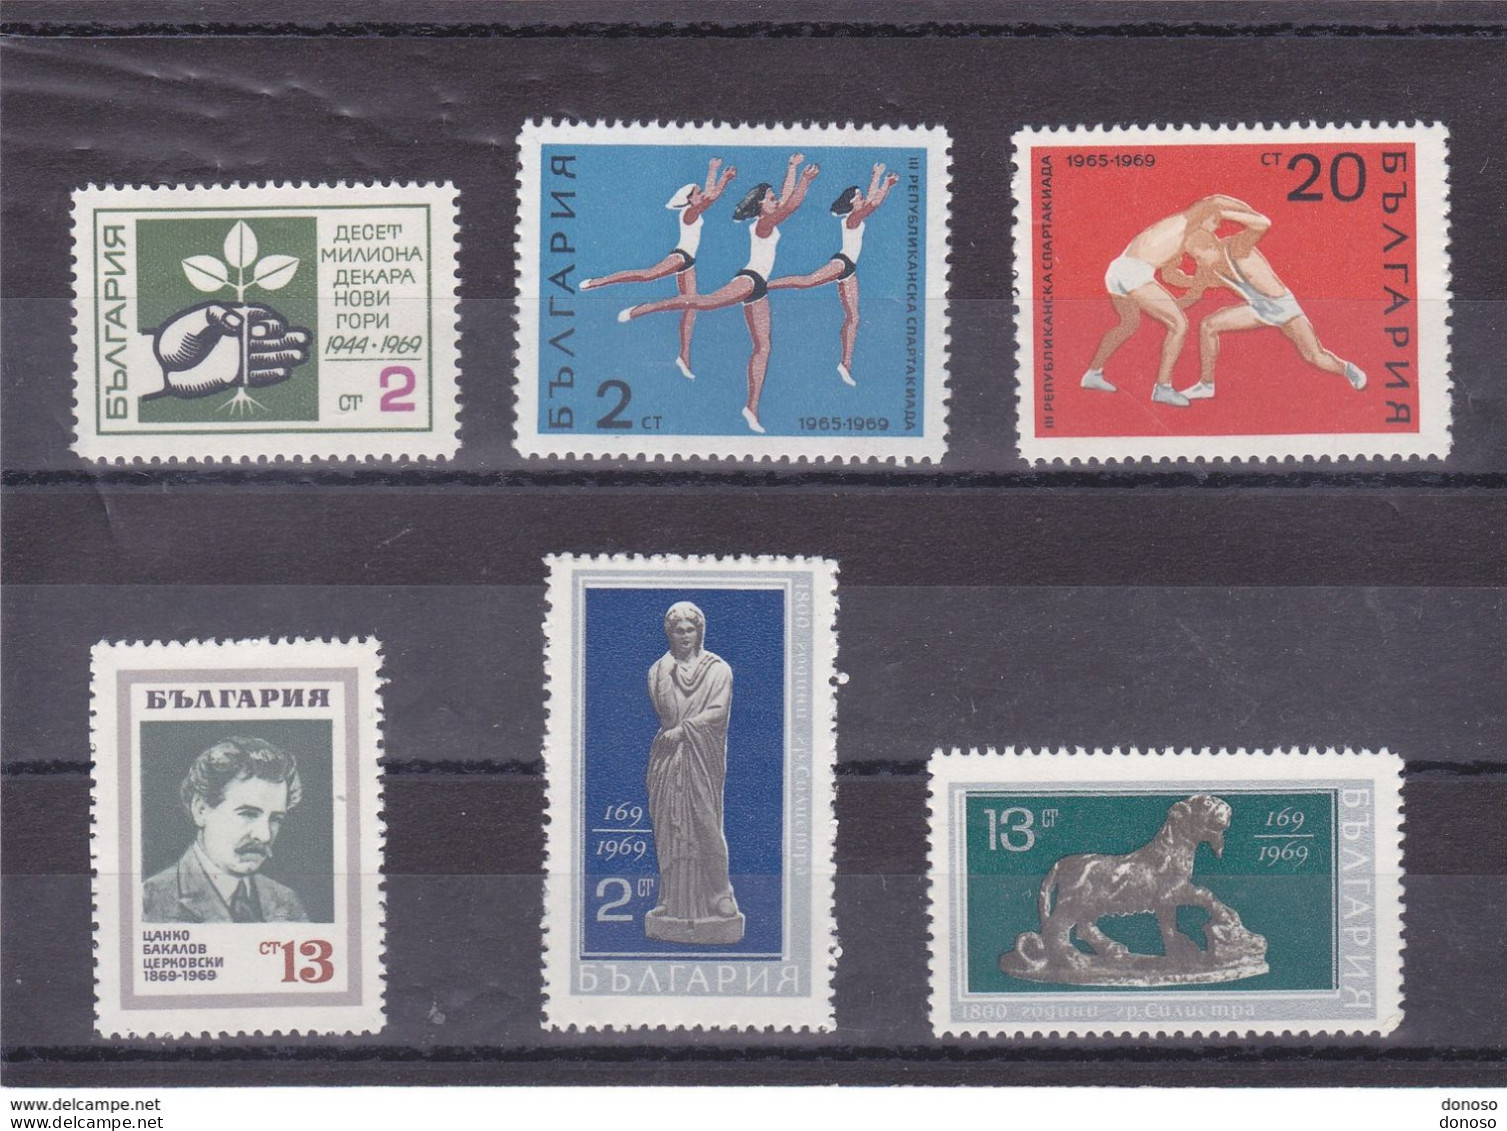 BULGARIE 1969 Yvert 1701 + 1714-1716 +  1740-1741, Michel 1922 + 1929-1931 + 1962-1963 NEUF** MNH - Unused Stamps